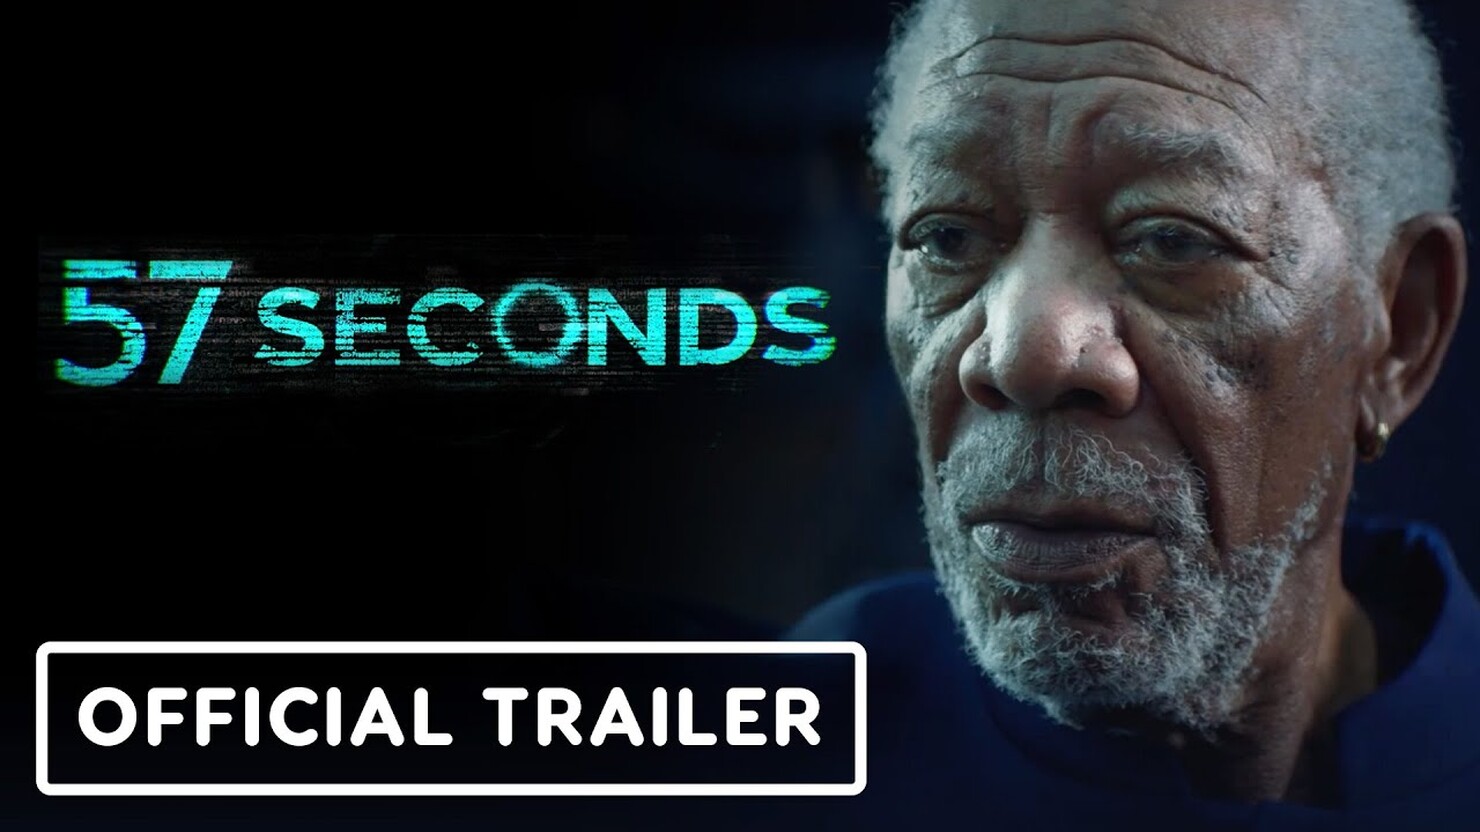 57 seconds trailer